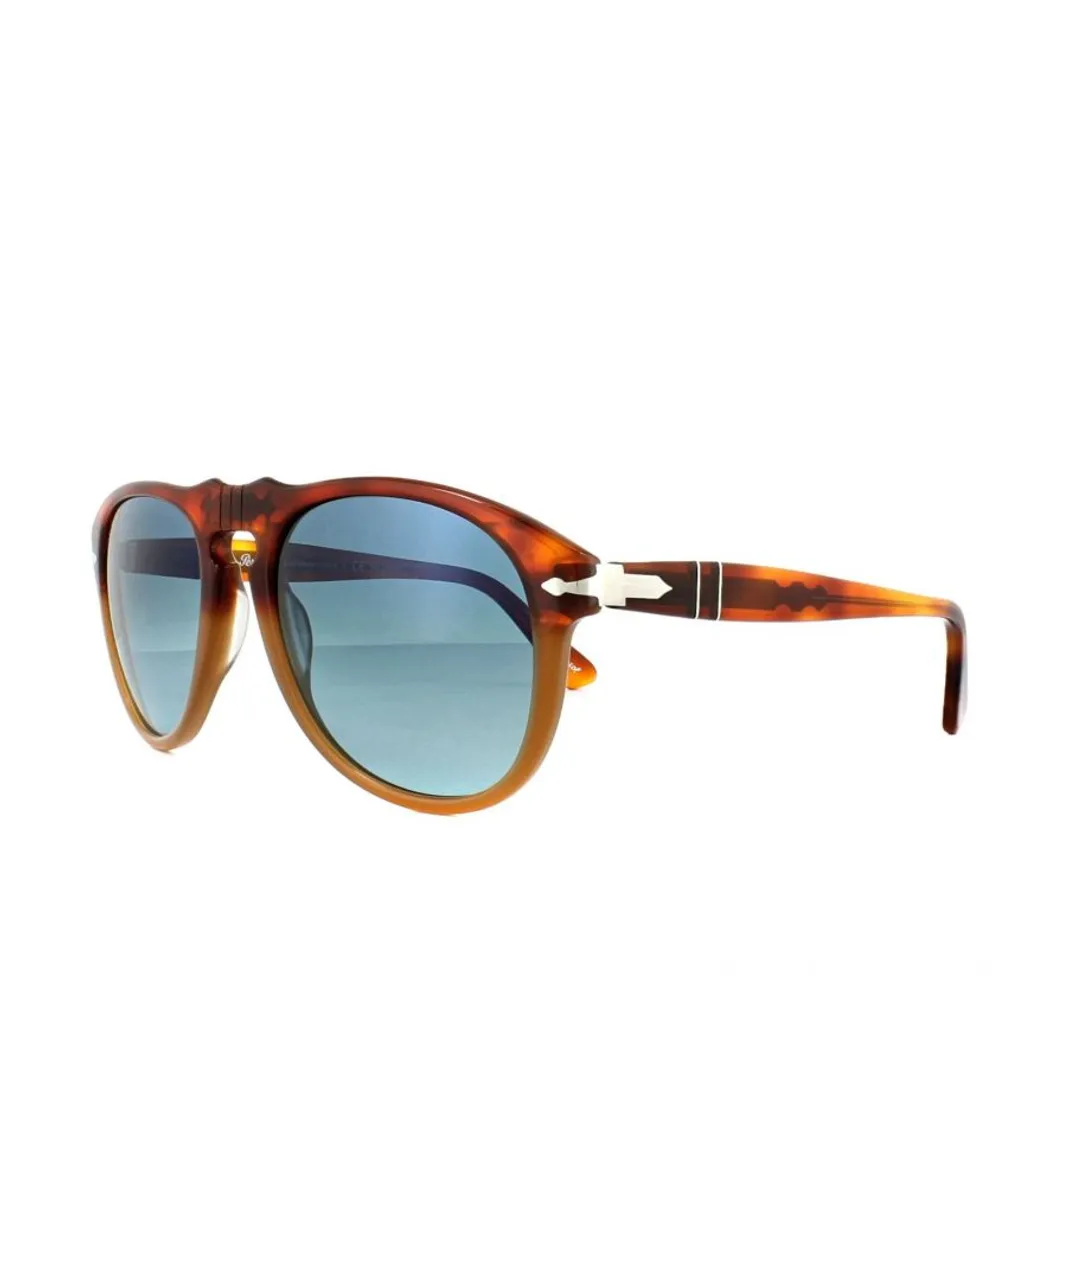 Persol Mens Sunglasses 0649 1025S3 Resina e Sale Brown Blue Polarized 54mm - One